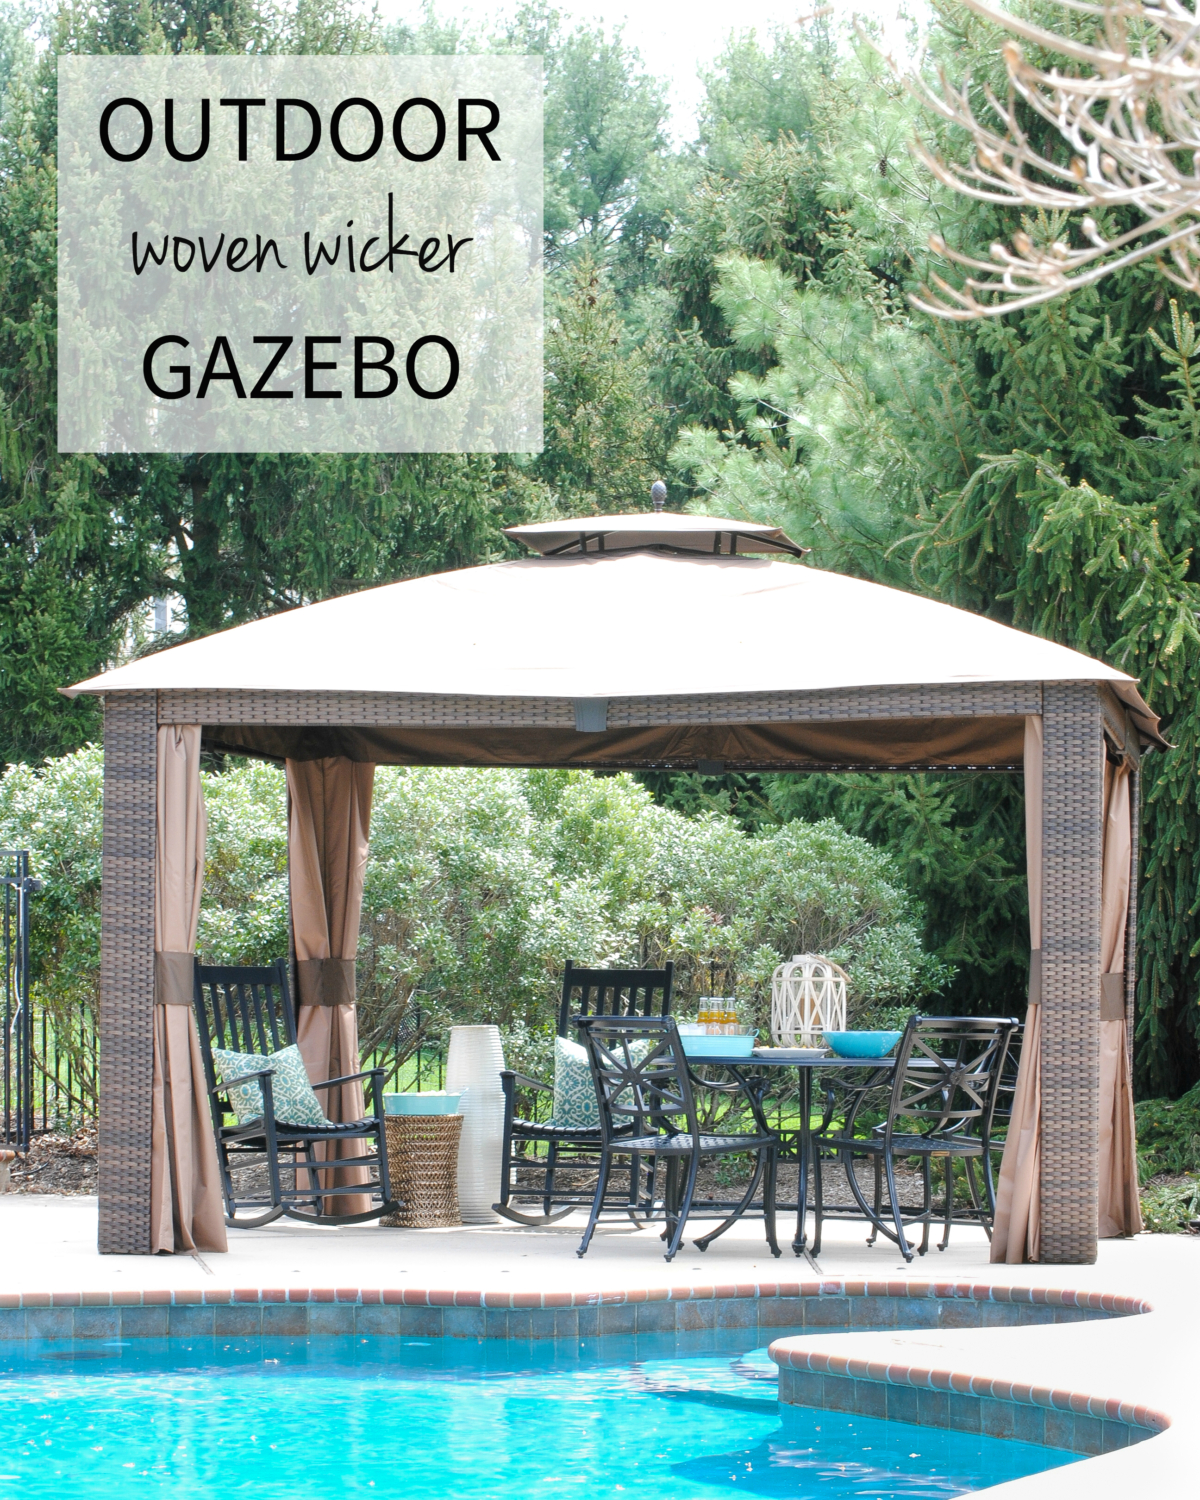 Luxury outdoor woven wicker gazebo for an amazing price!